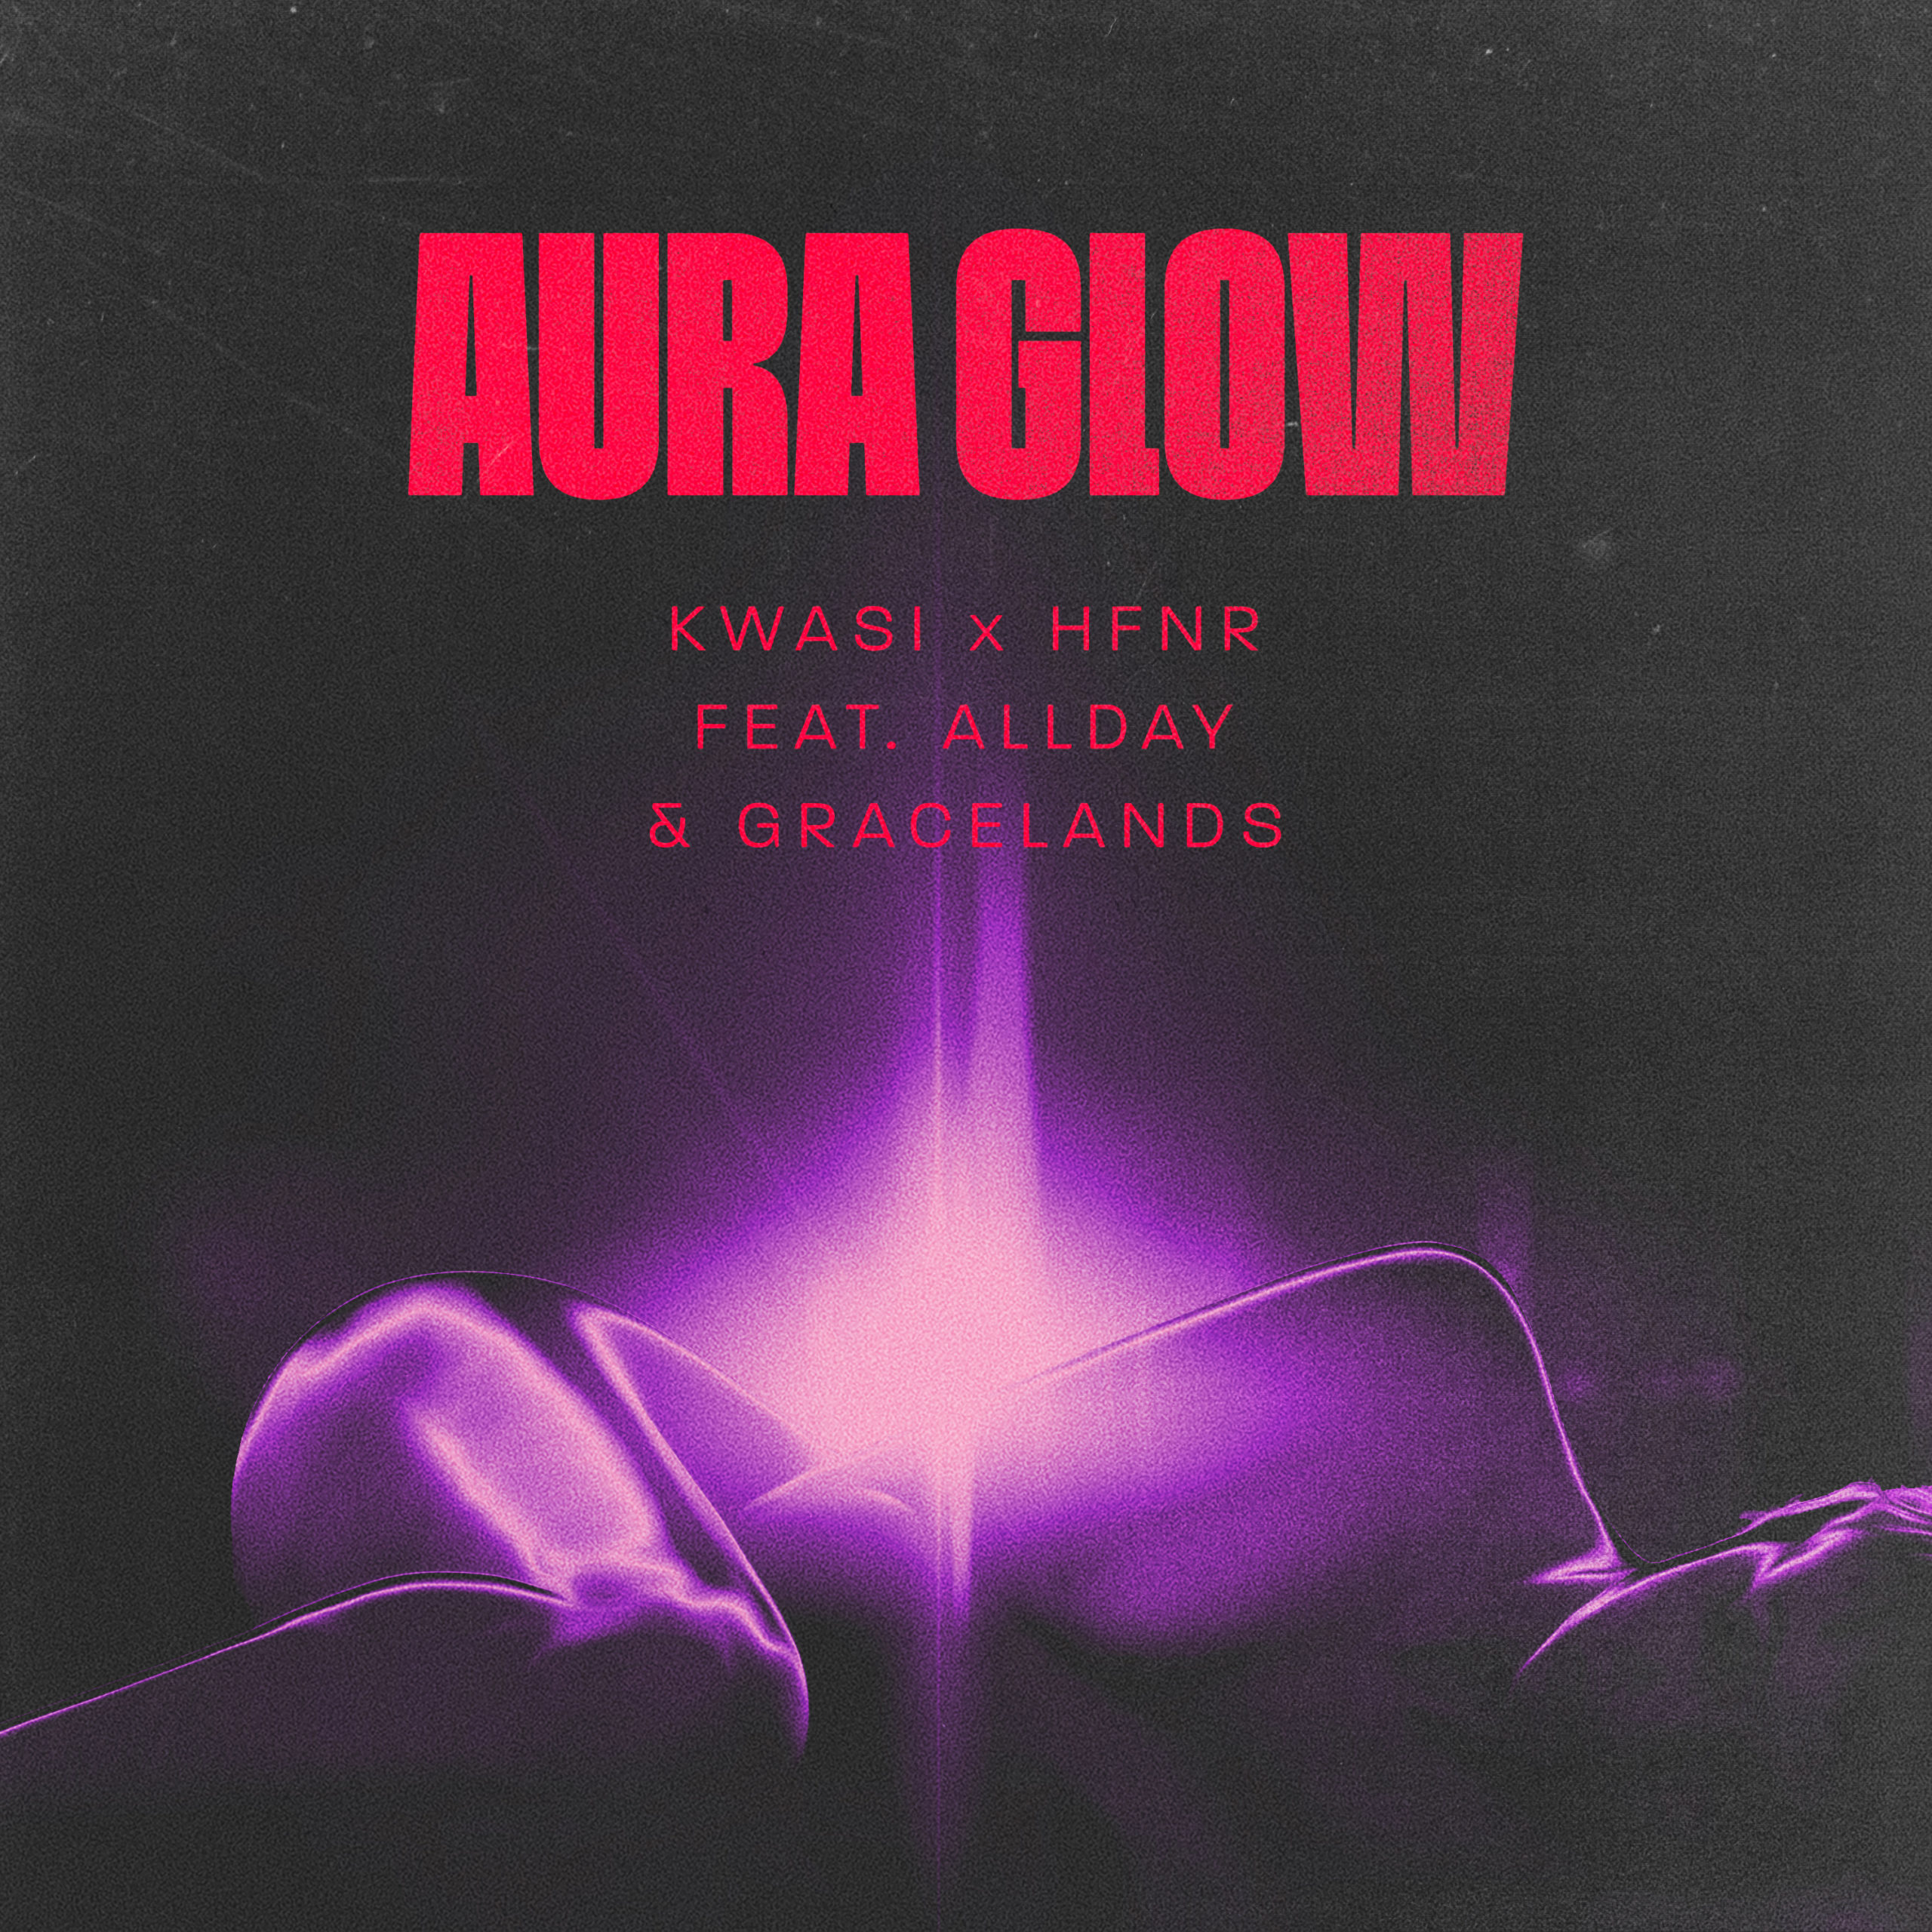 Kwasi x HFNR – “Aura Glow” Feat. Allday & Gracelands